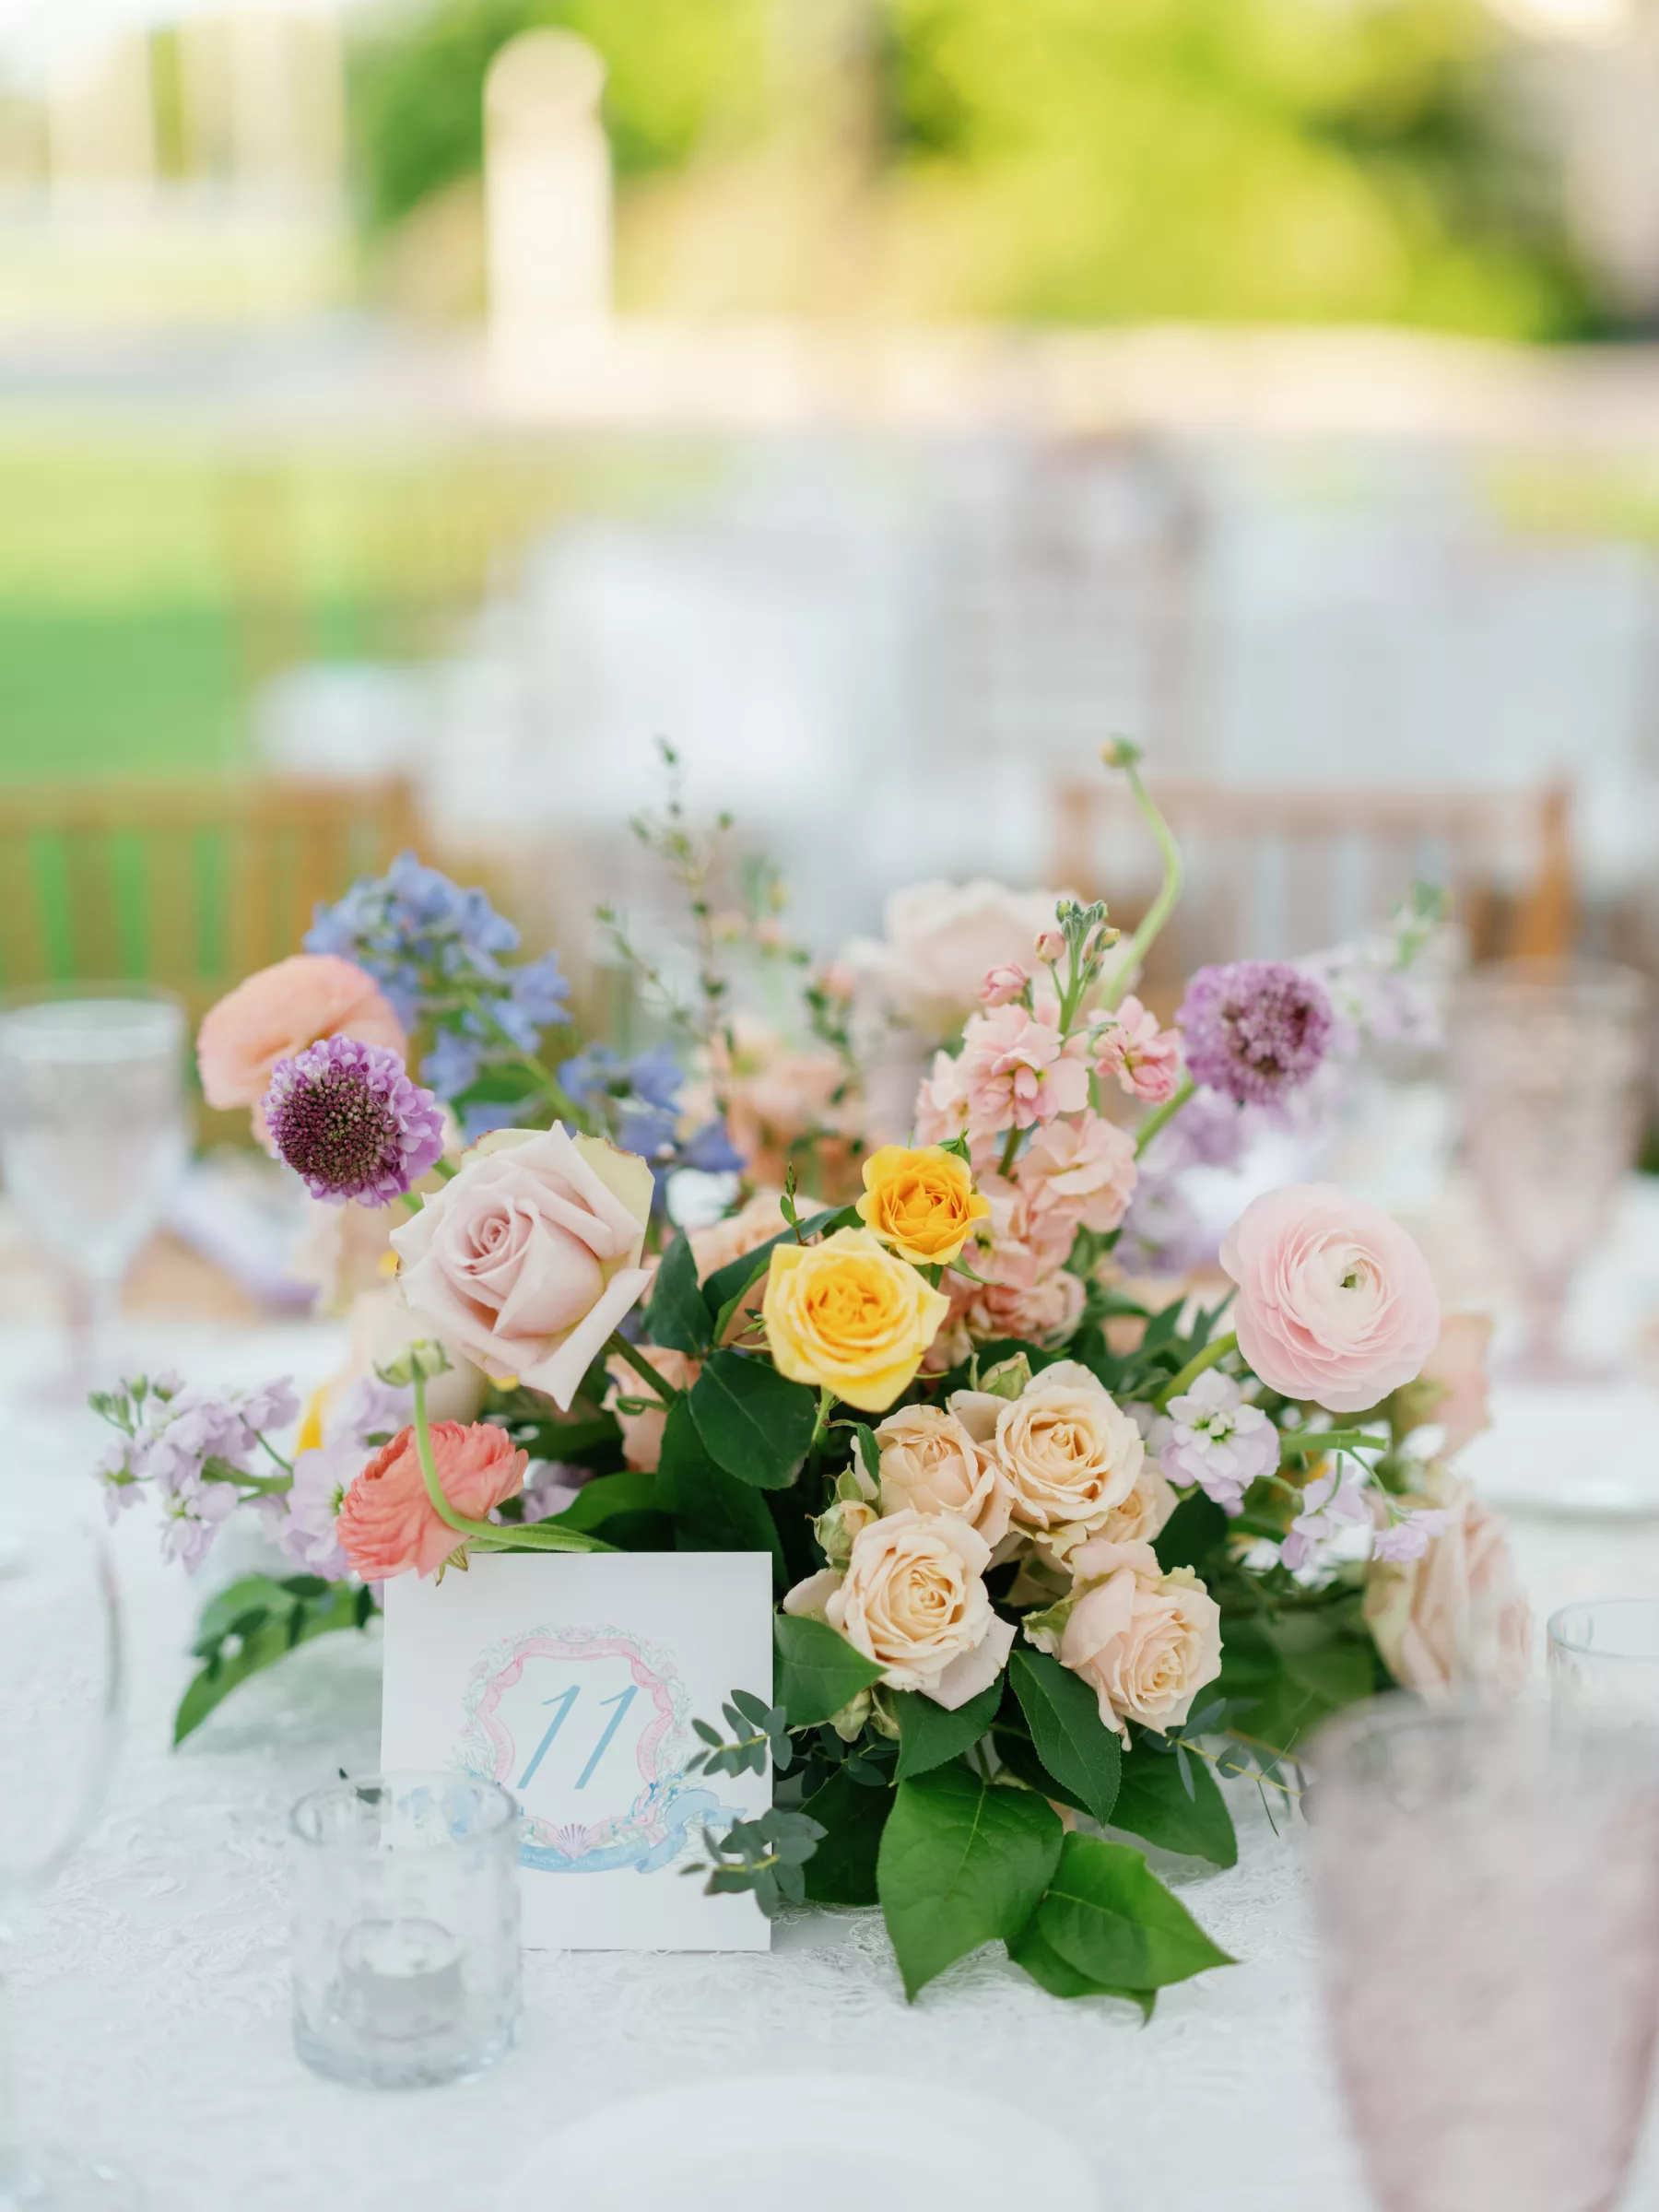 Pastel Pink and Yellow Roses, Ranunculus, Stock Flowers Wedding Reception Centerpiece Decor Ideas